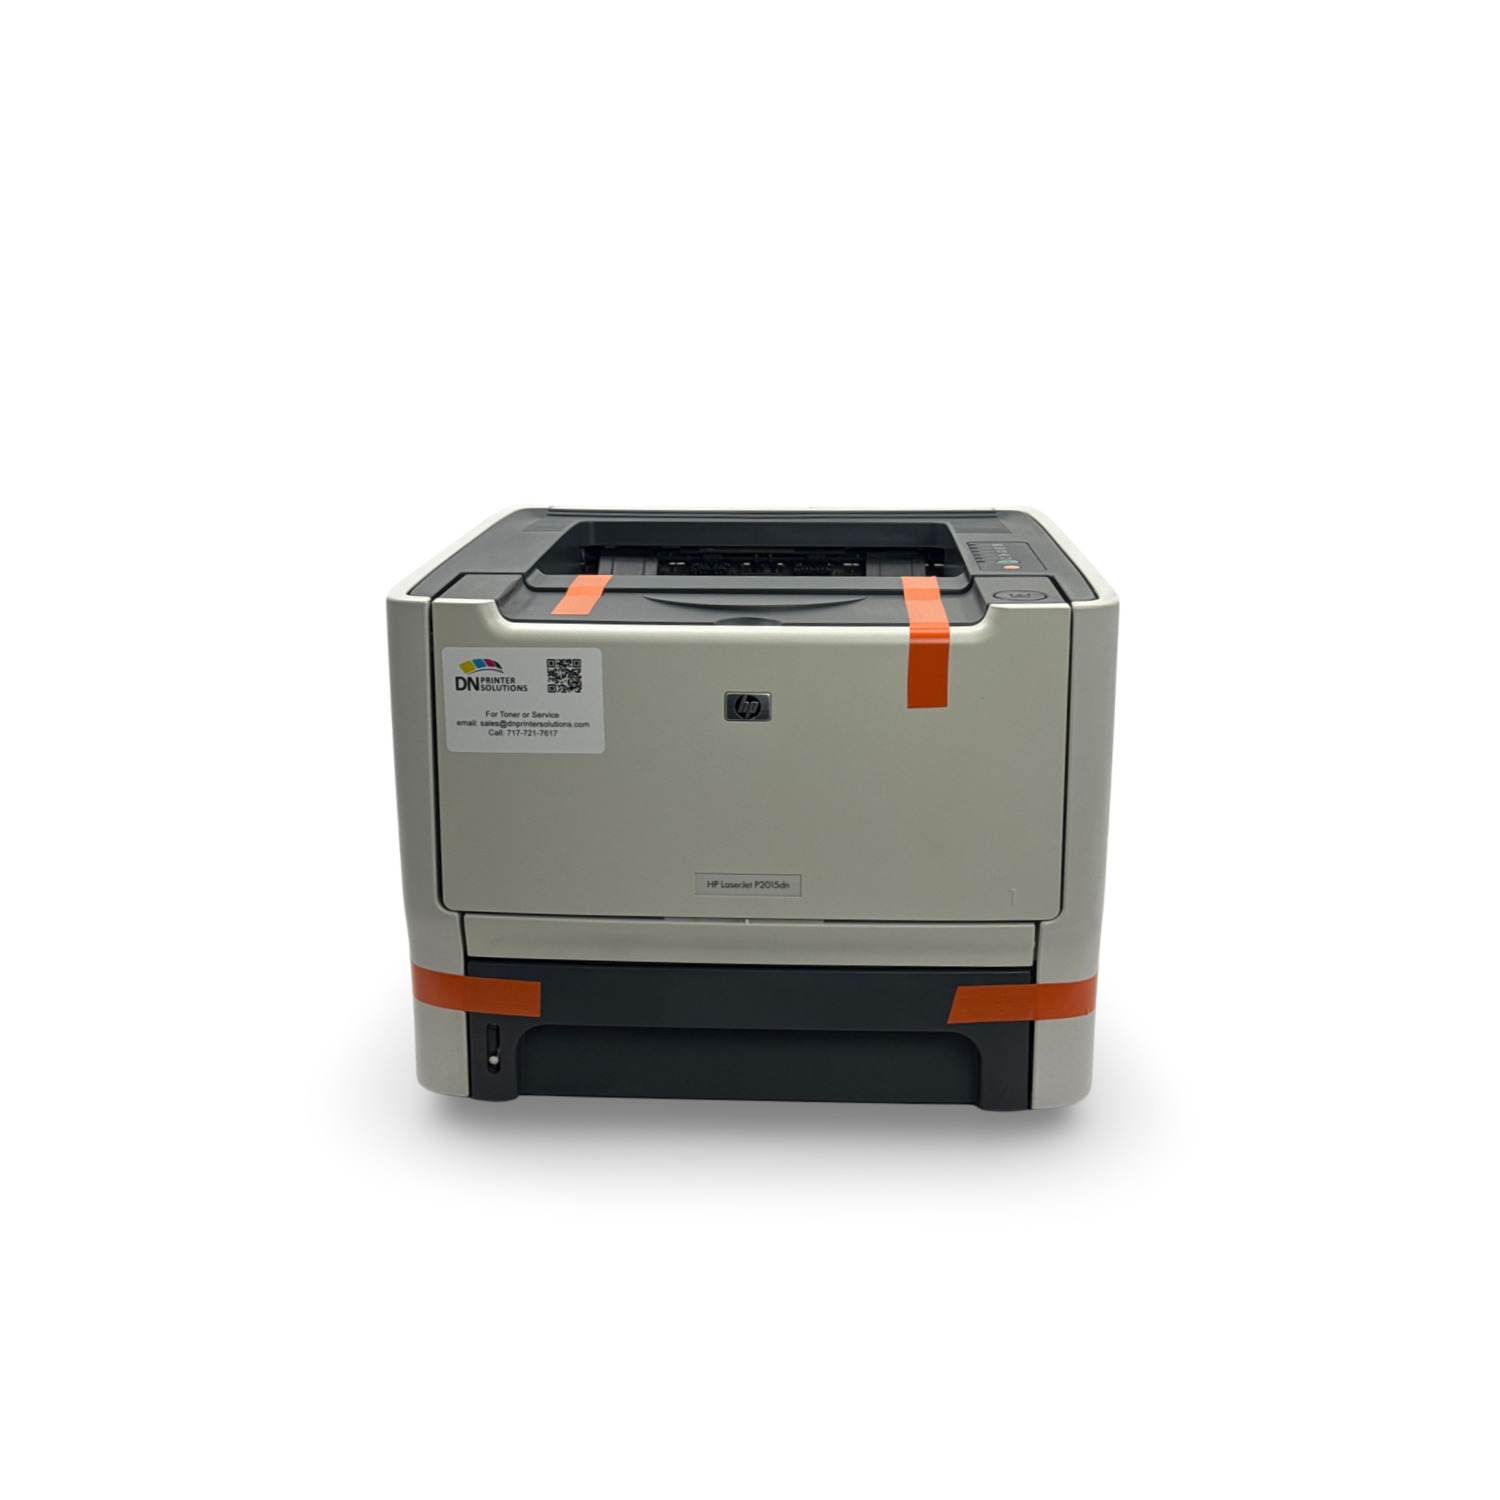 HP LaserJet P2015dn Monochrome Laser Printer Auto-Duplex TONER INCLUDED